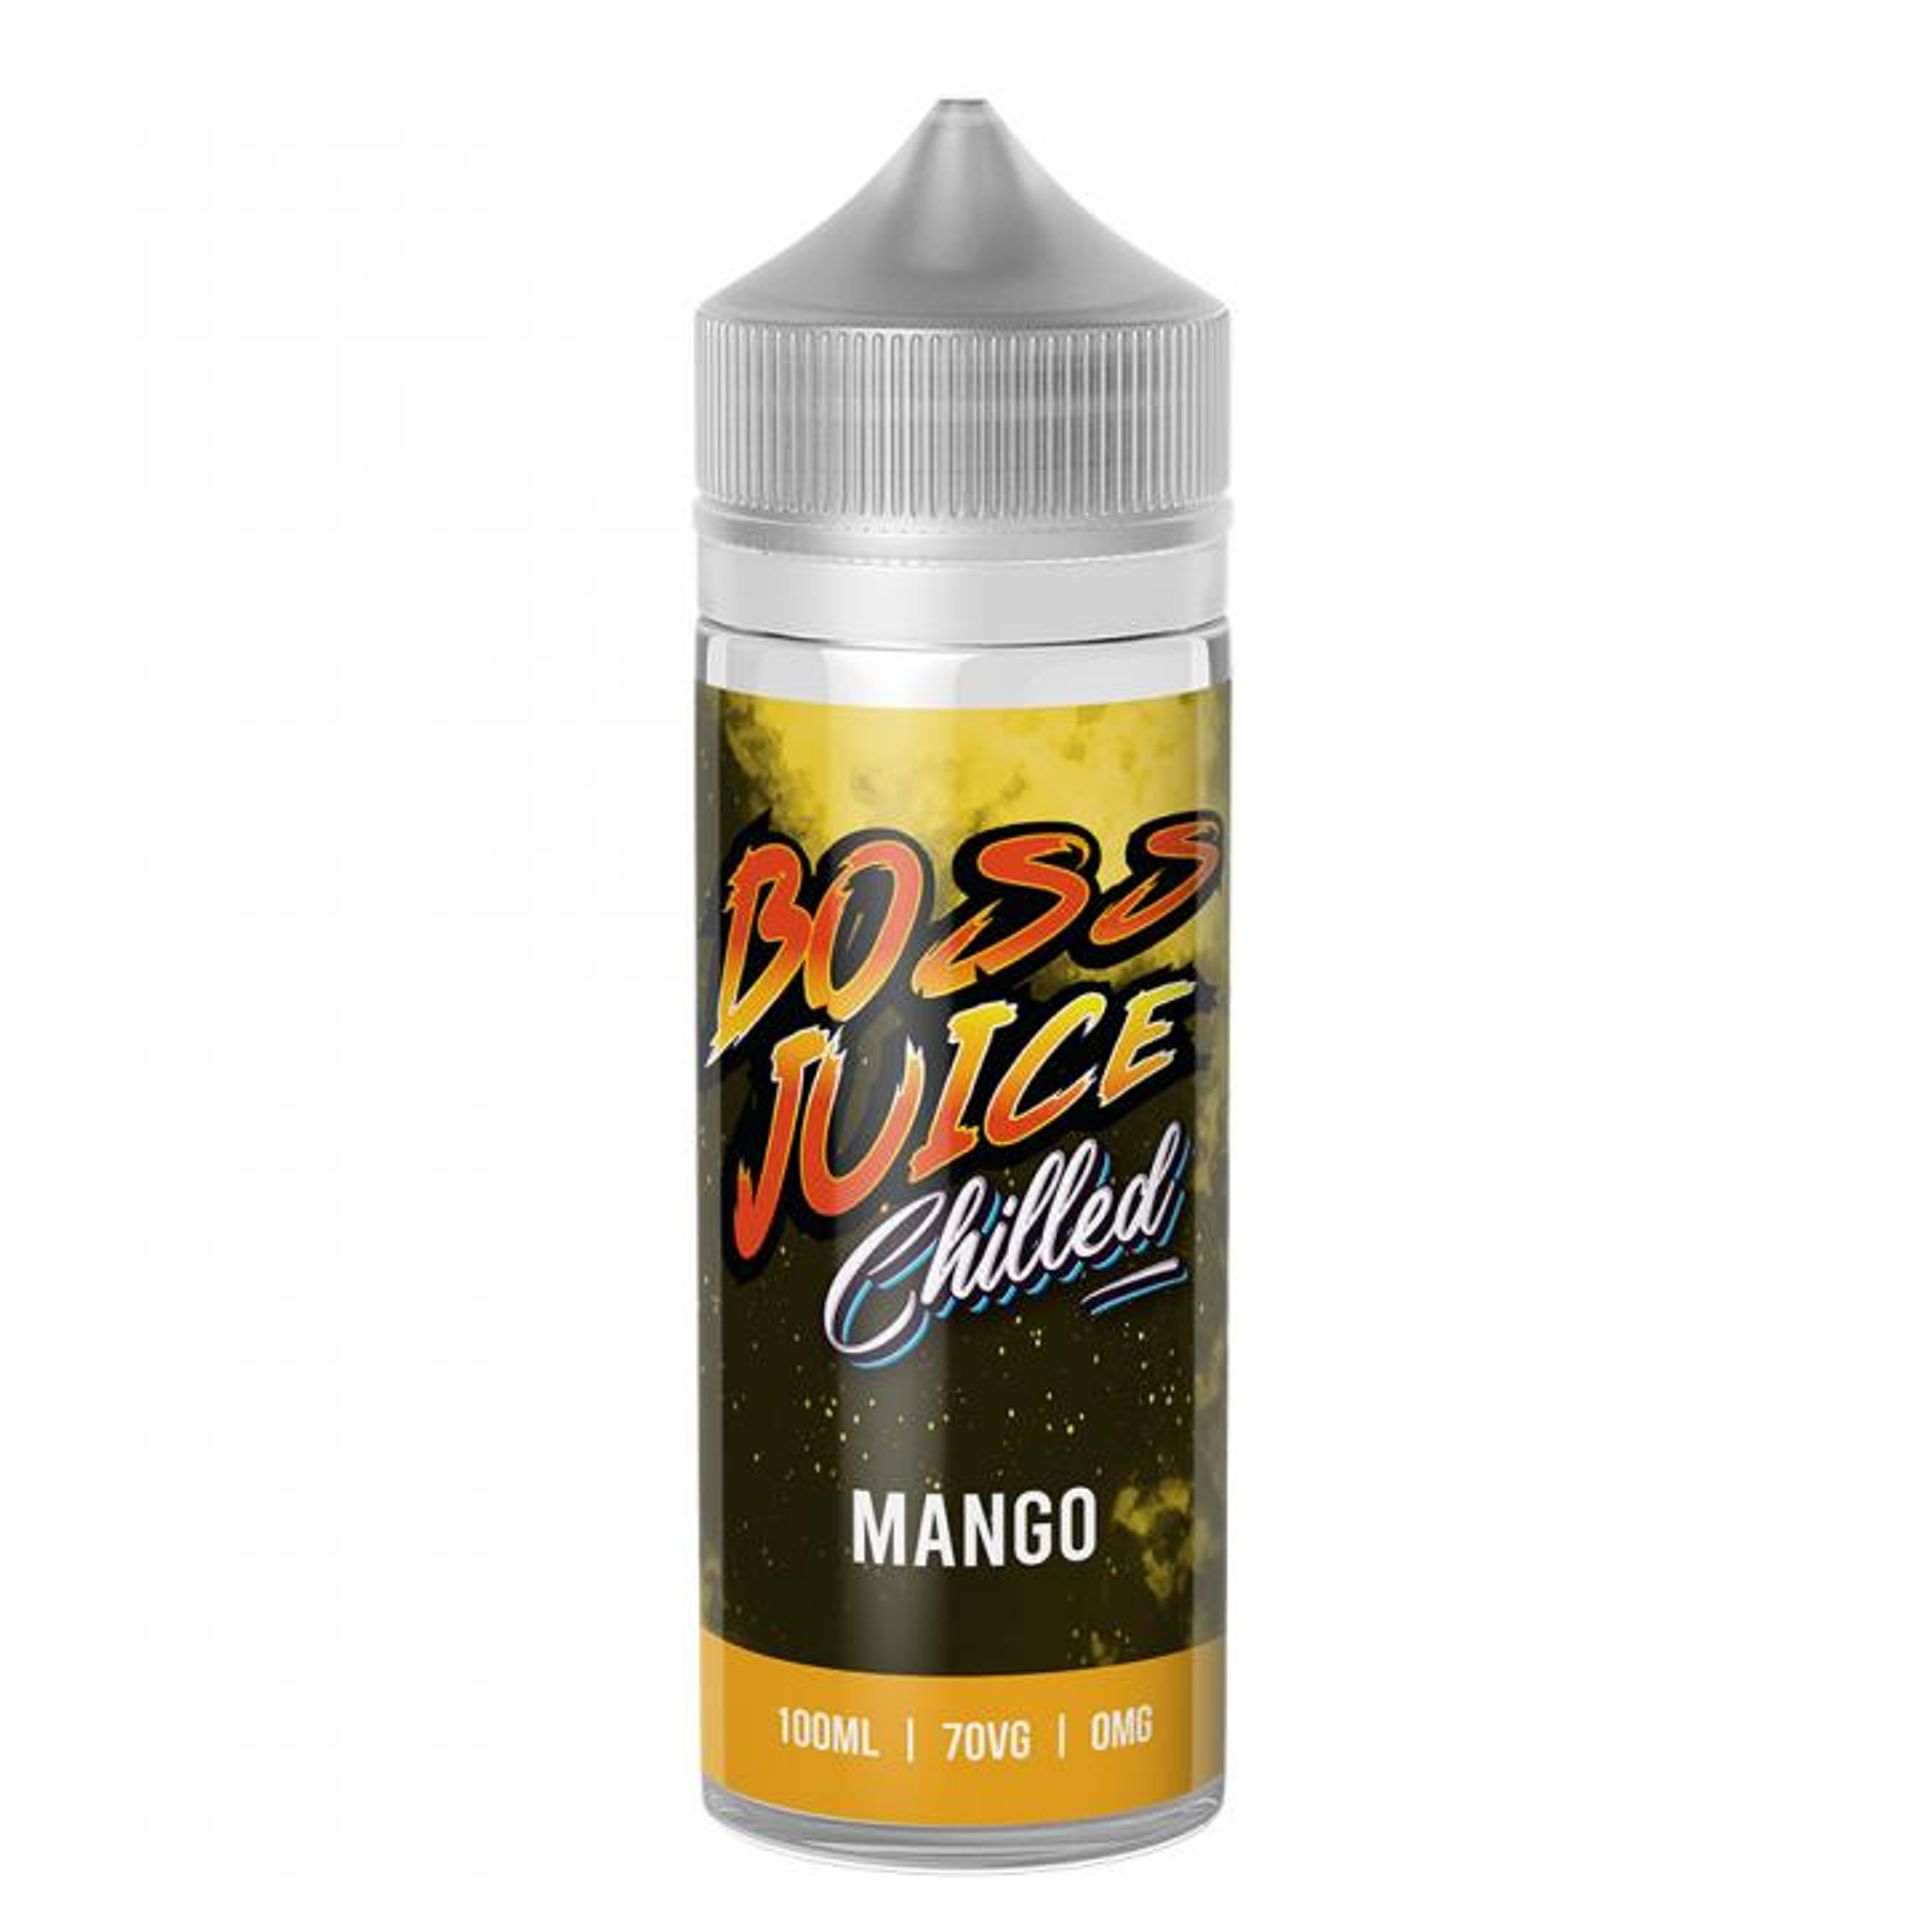 Image of Mango Ice by Boss Juice